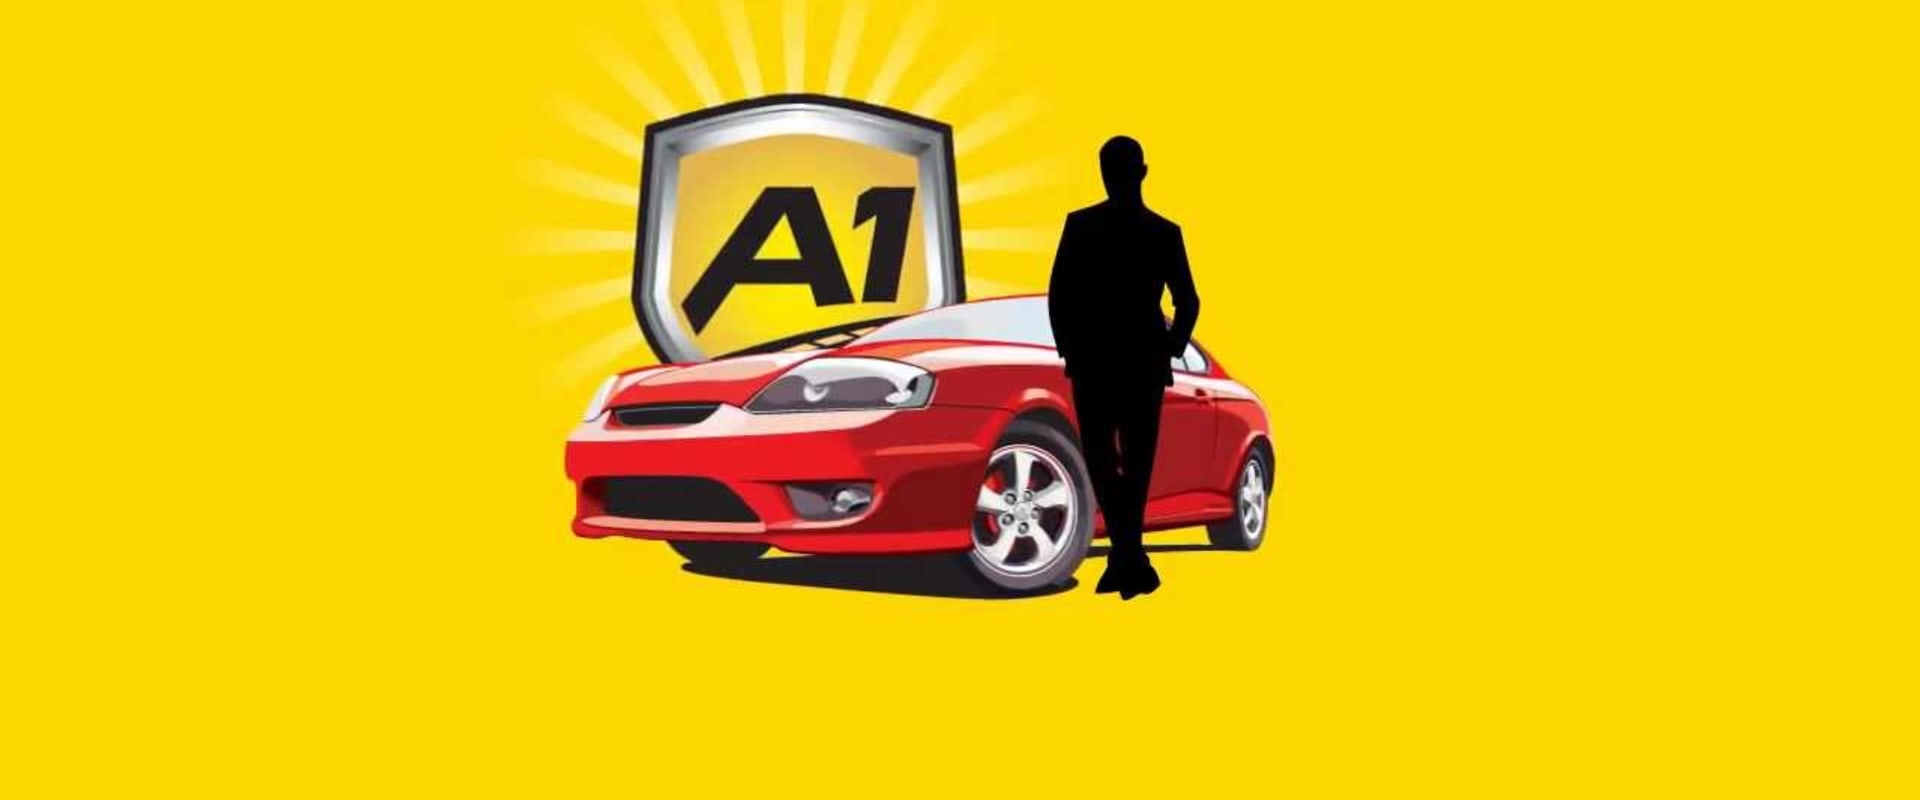 The Best Car Transportation Services: A-1 Auto Transport Inc